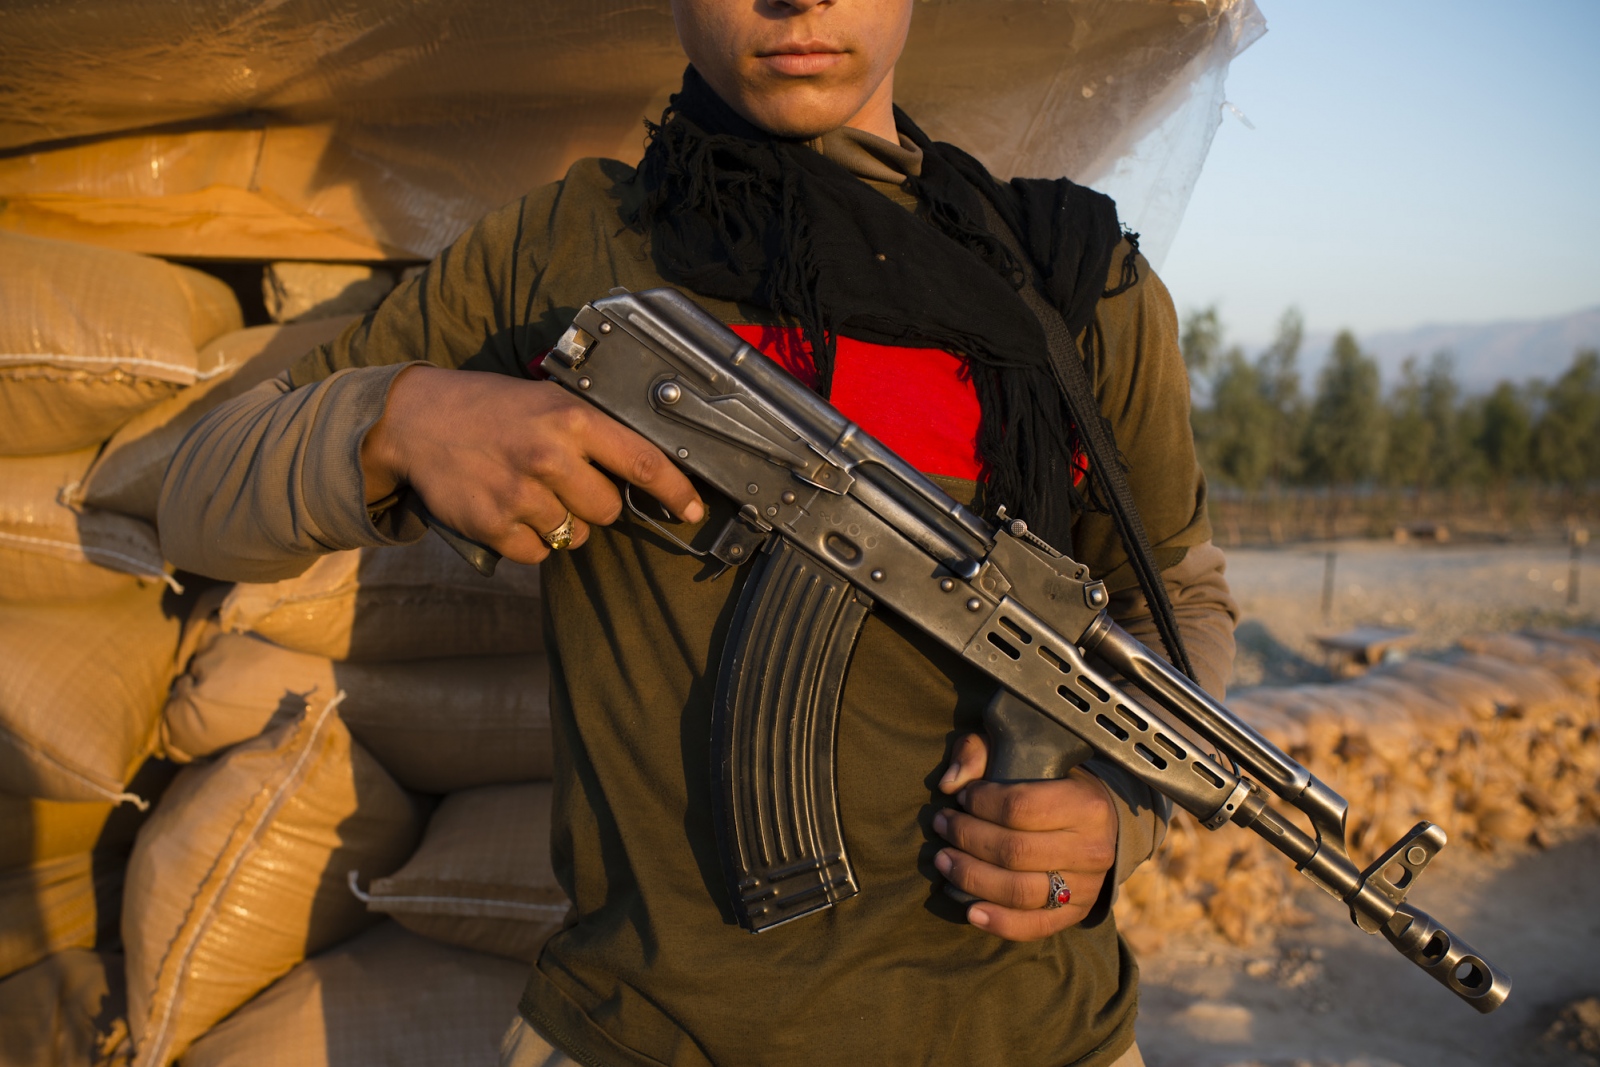 Child Soldiers for CSI - NANGARHAR, AFGHANISTAN | 2015-12-03 | HW is 15 year old...